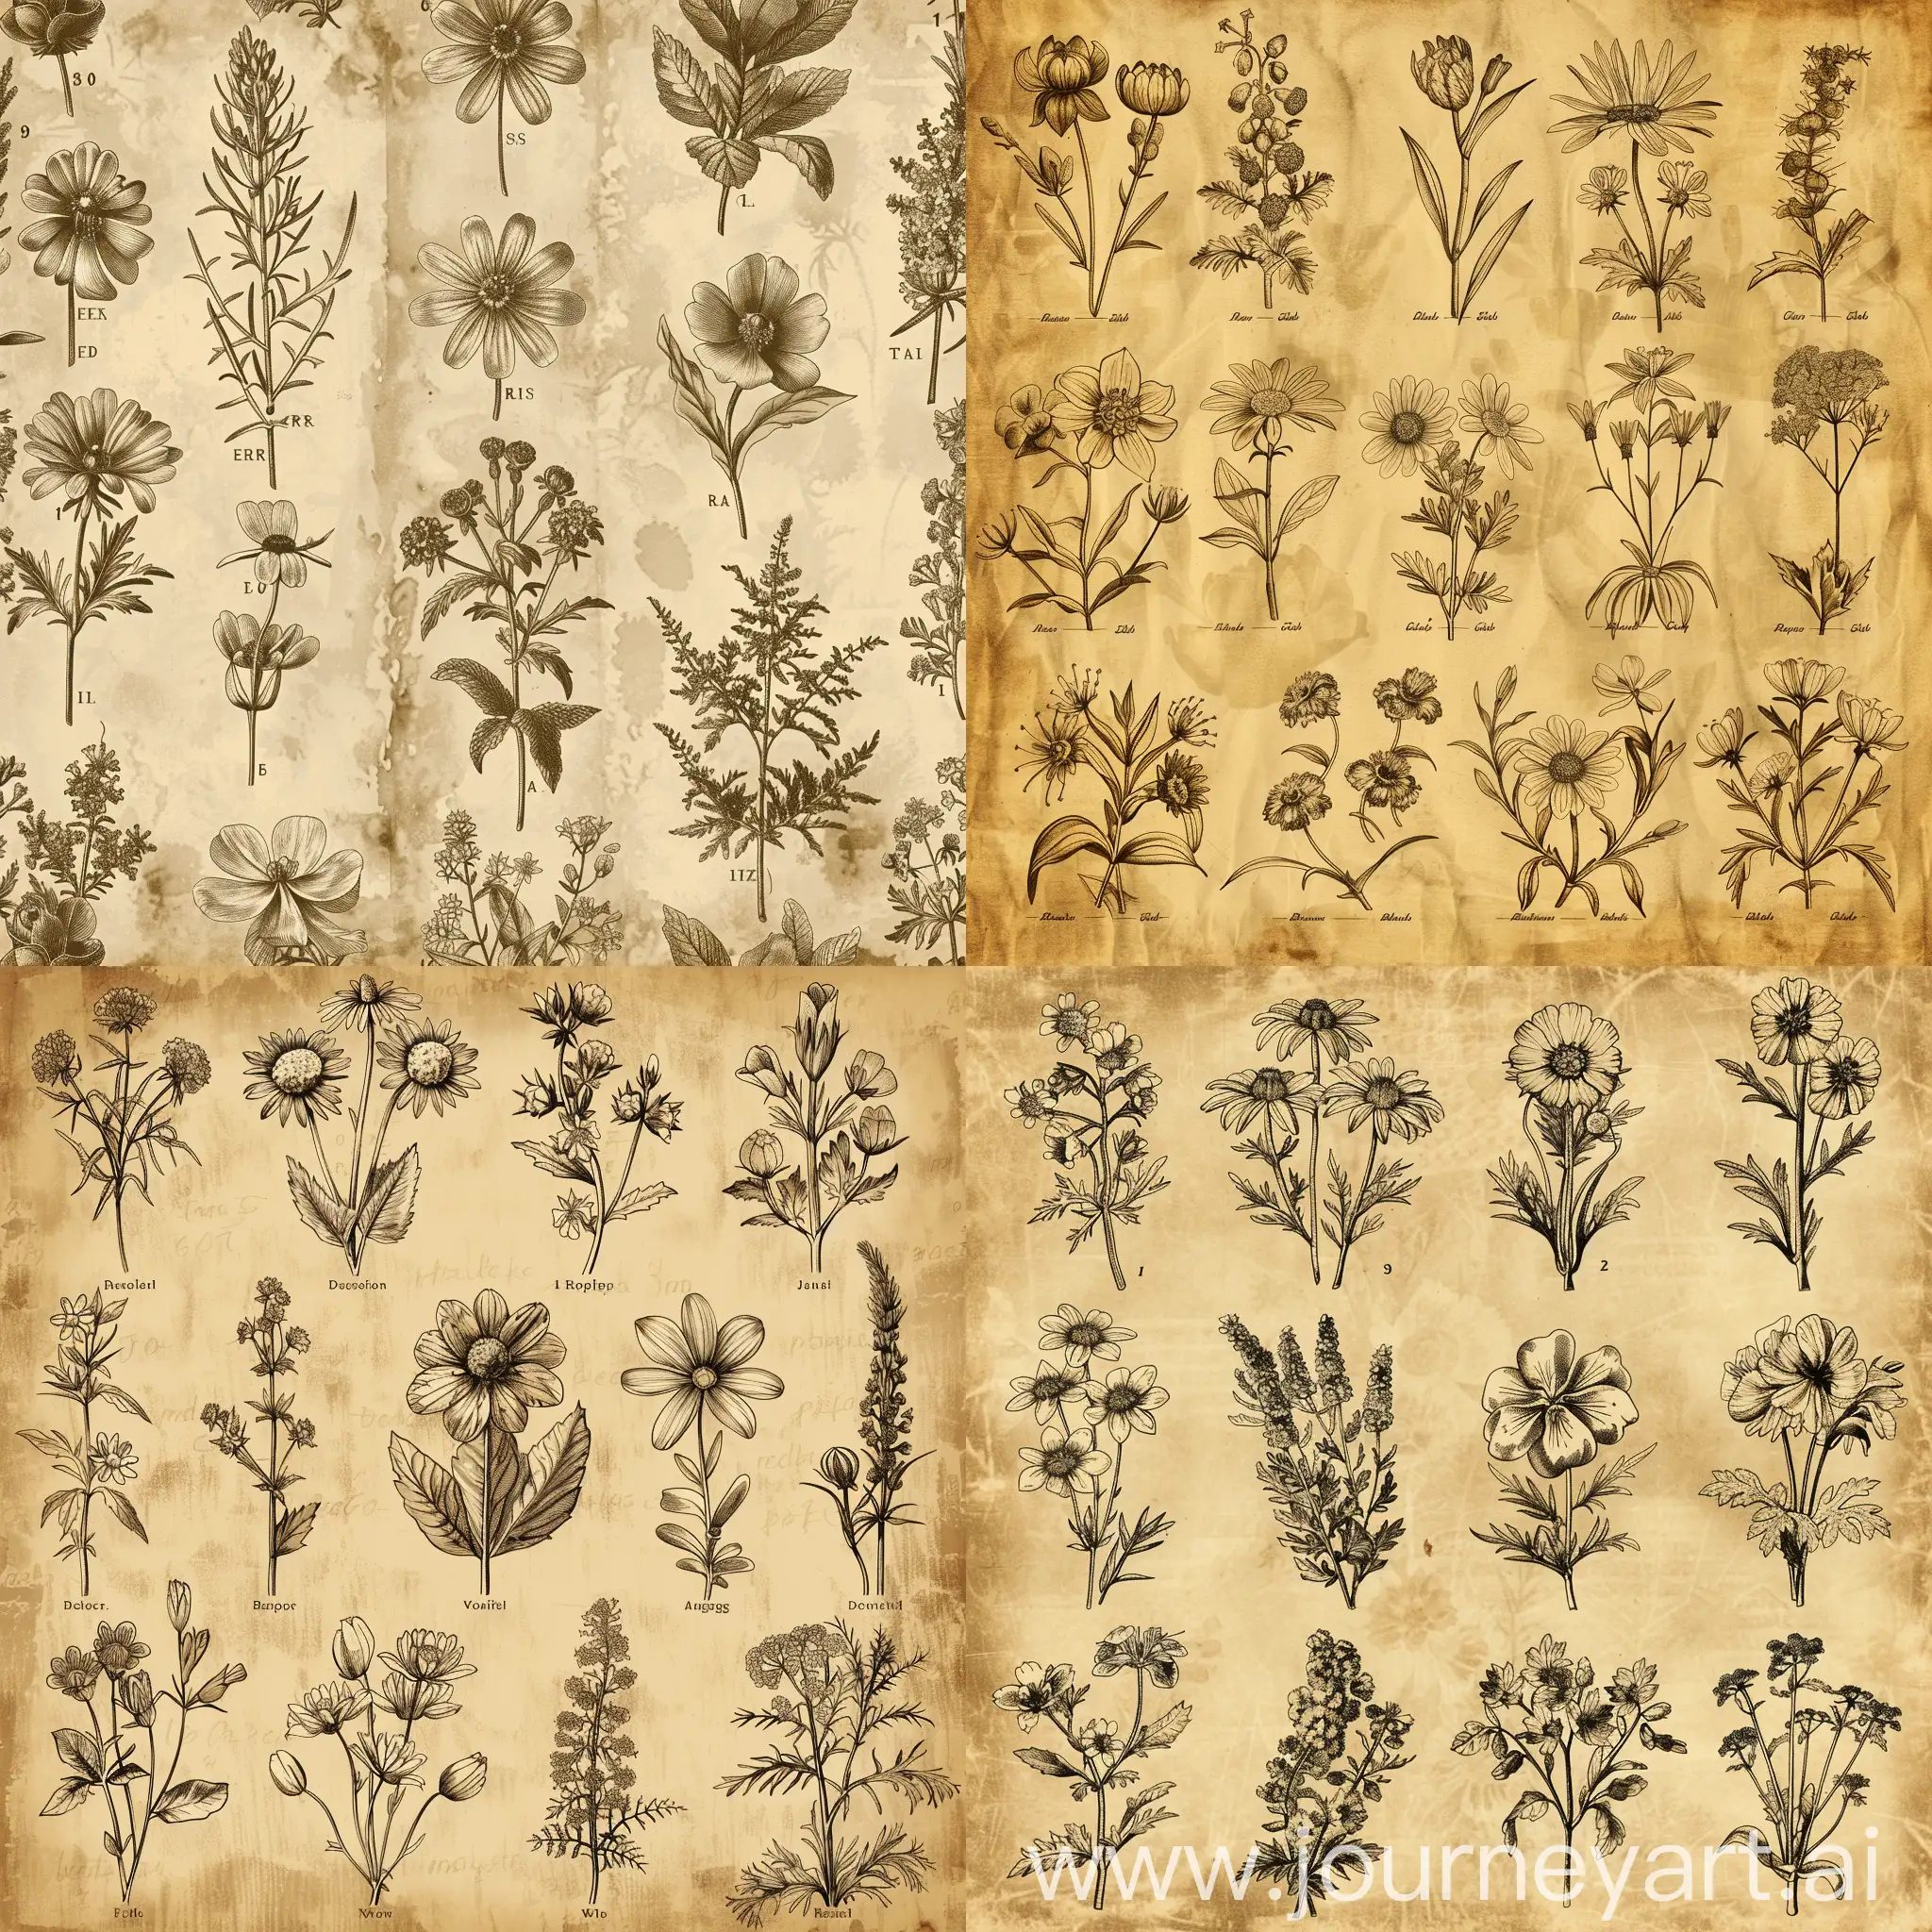 Vintage-Botanical-Illustration-Pattern-of-Wildflowers-on-Parchment-Background